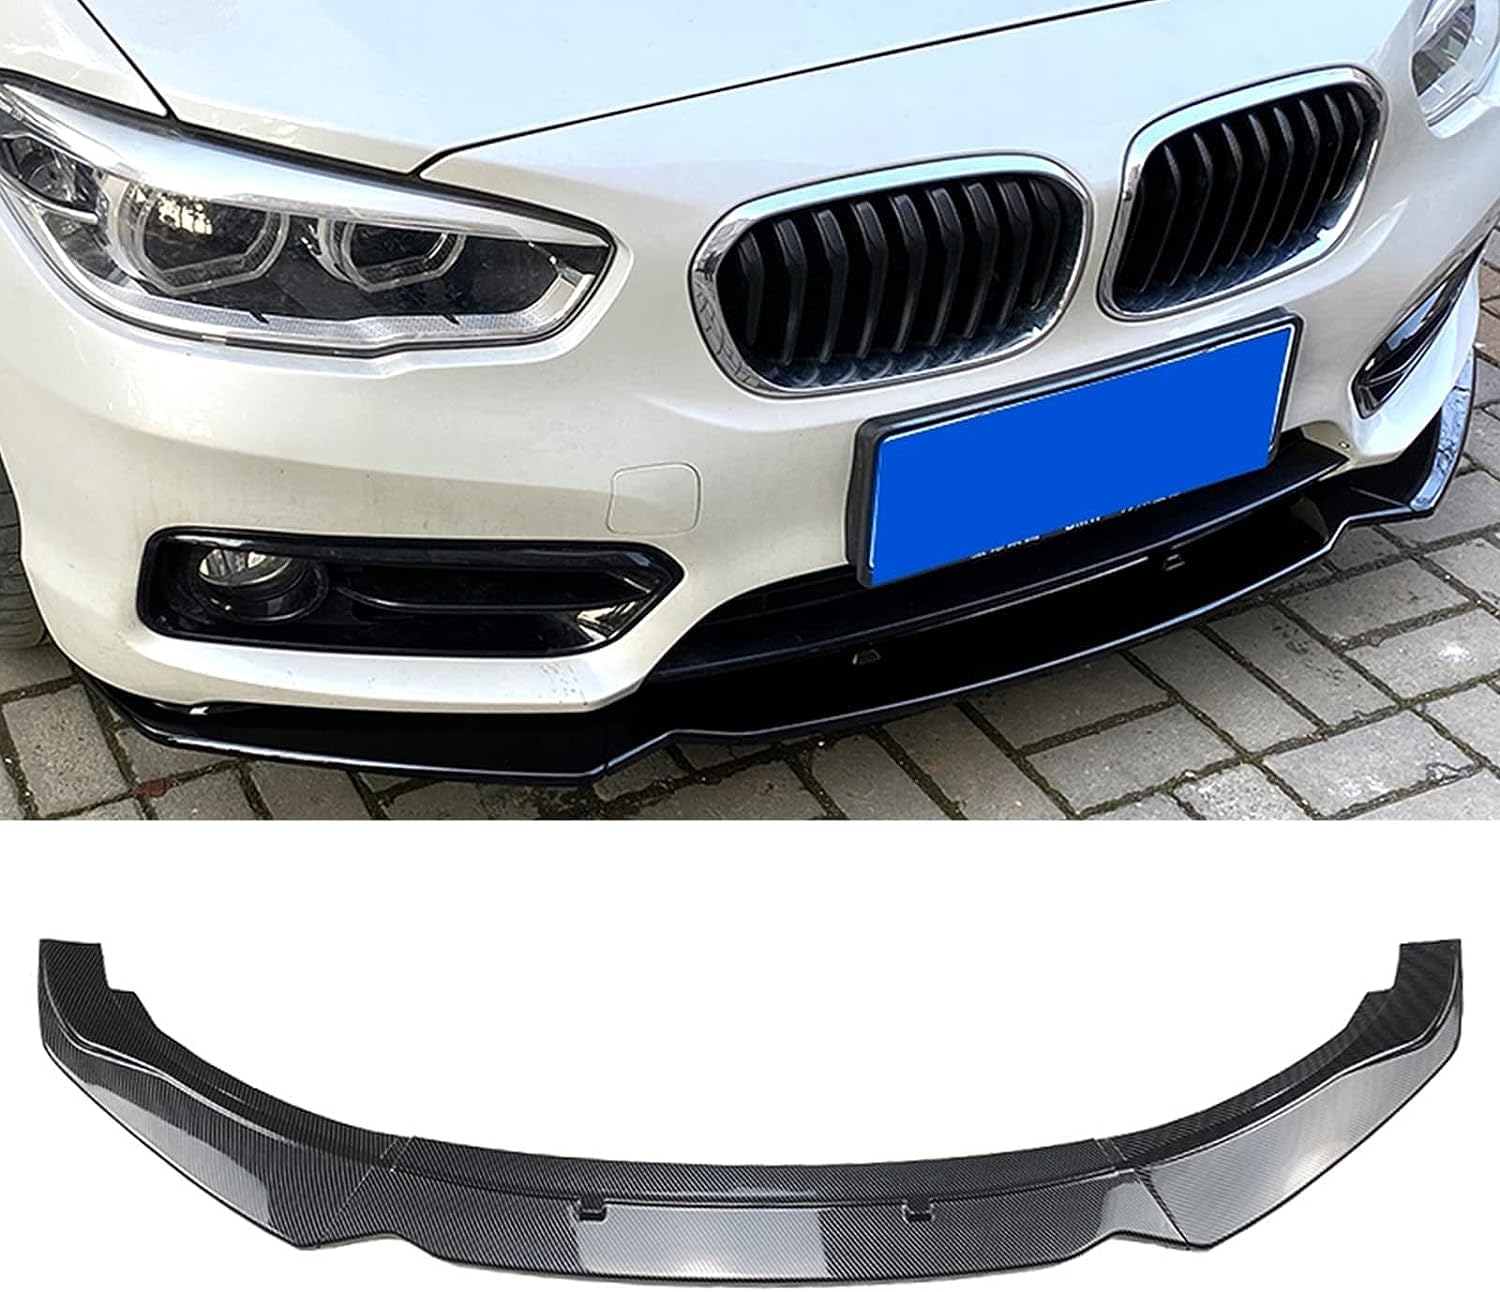 Auto Frontlippe Frontspoiler für BMW 1 Series F20 F21 116i 118i 120i 2015-2019, Frontstoßstange Splitter Lip Diffusor Frontspoiler Protector Kits,A/Carbon Fiber von LCGAF